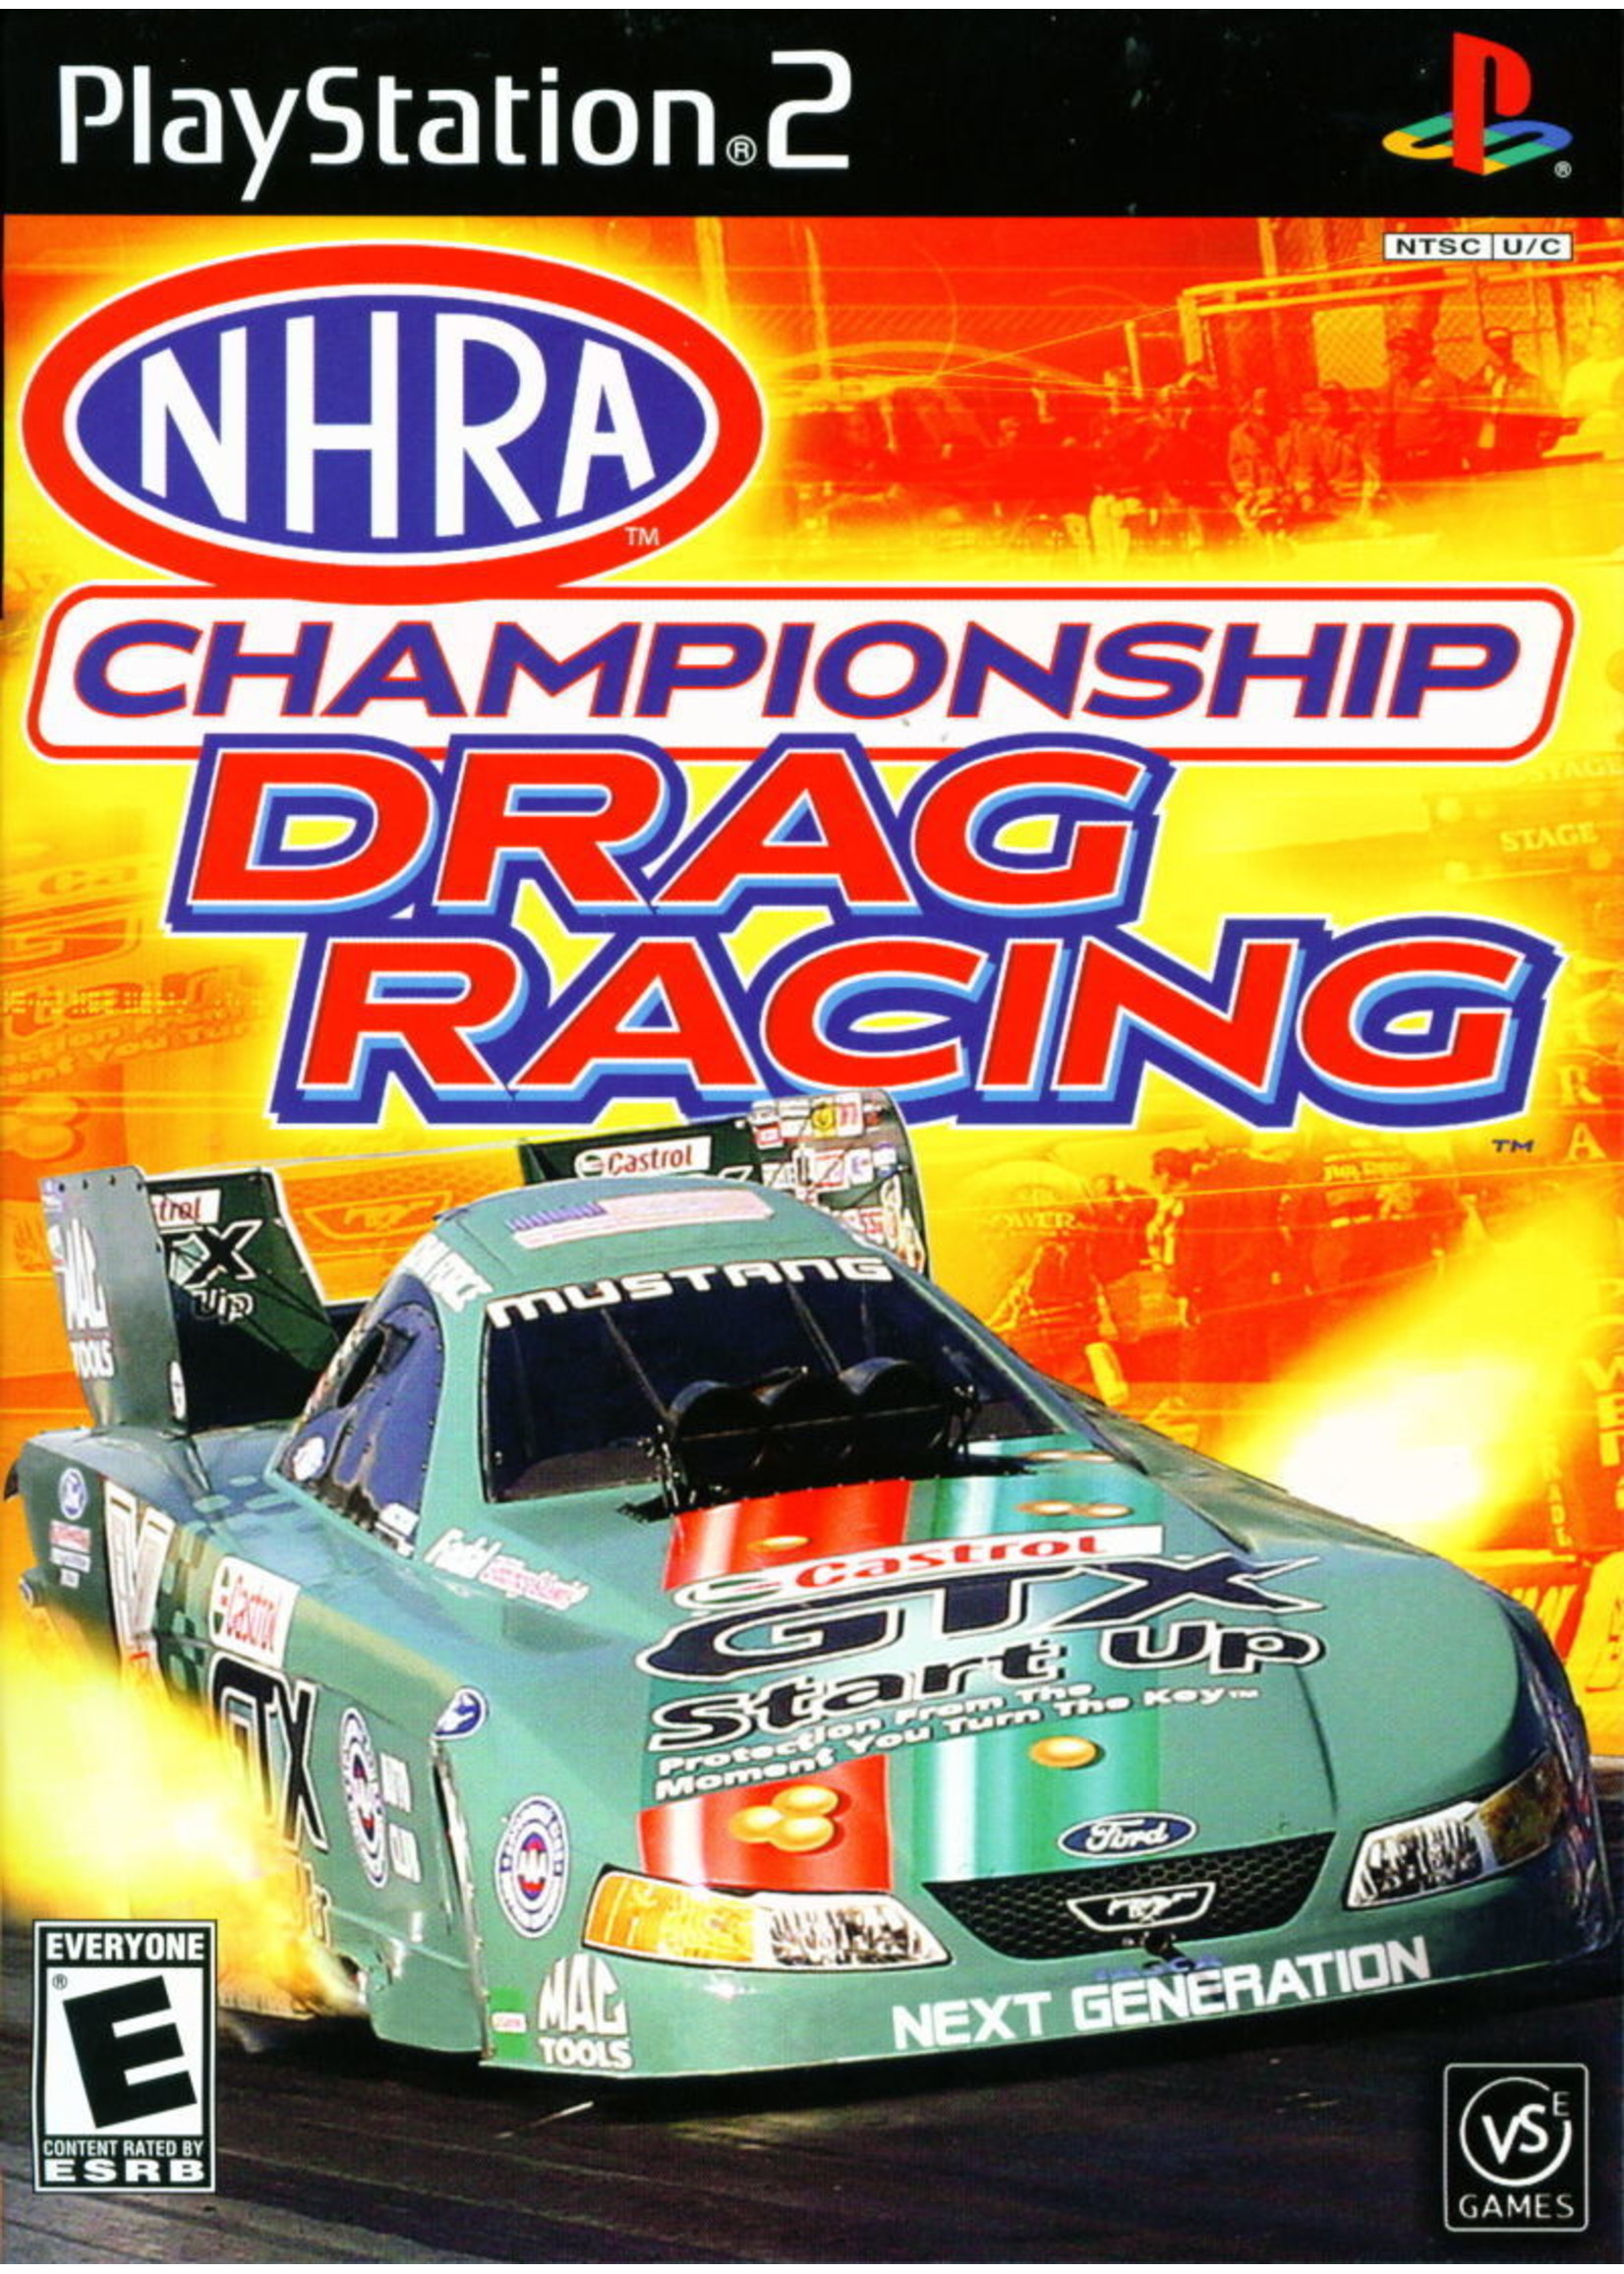 Sony Playstation 2 (PS2) NHRA Championship Drag Racing